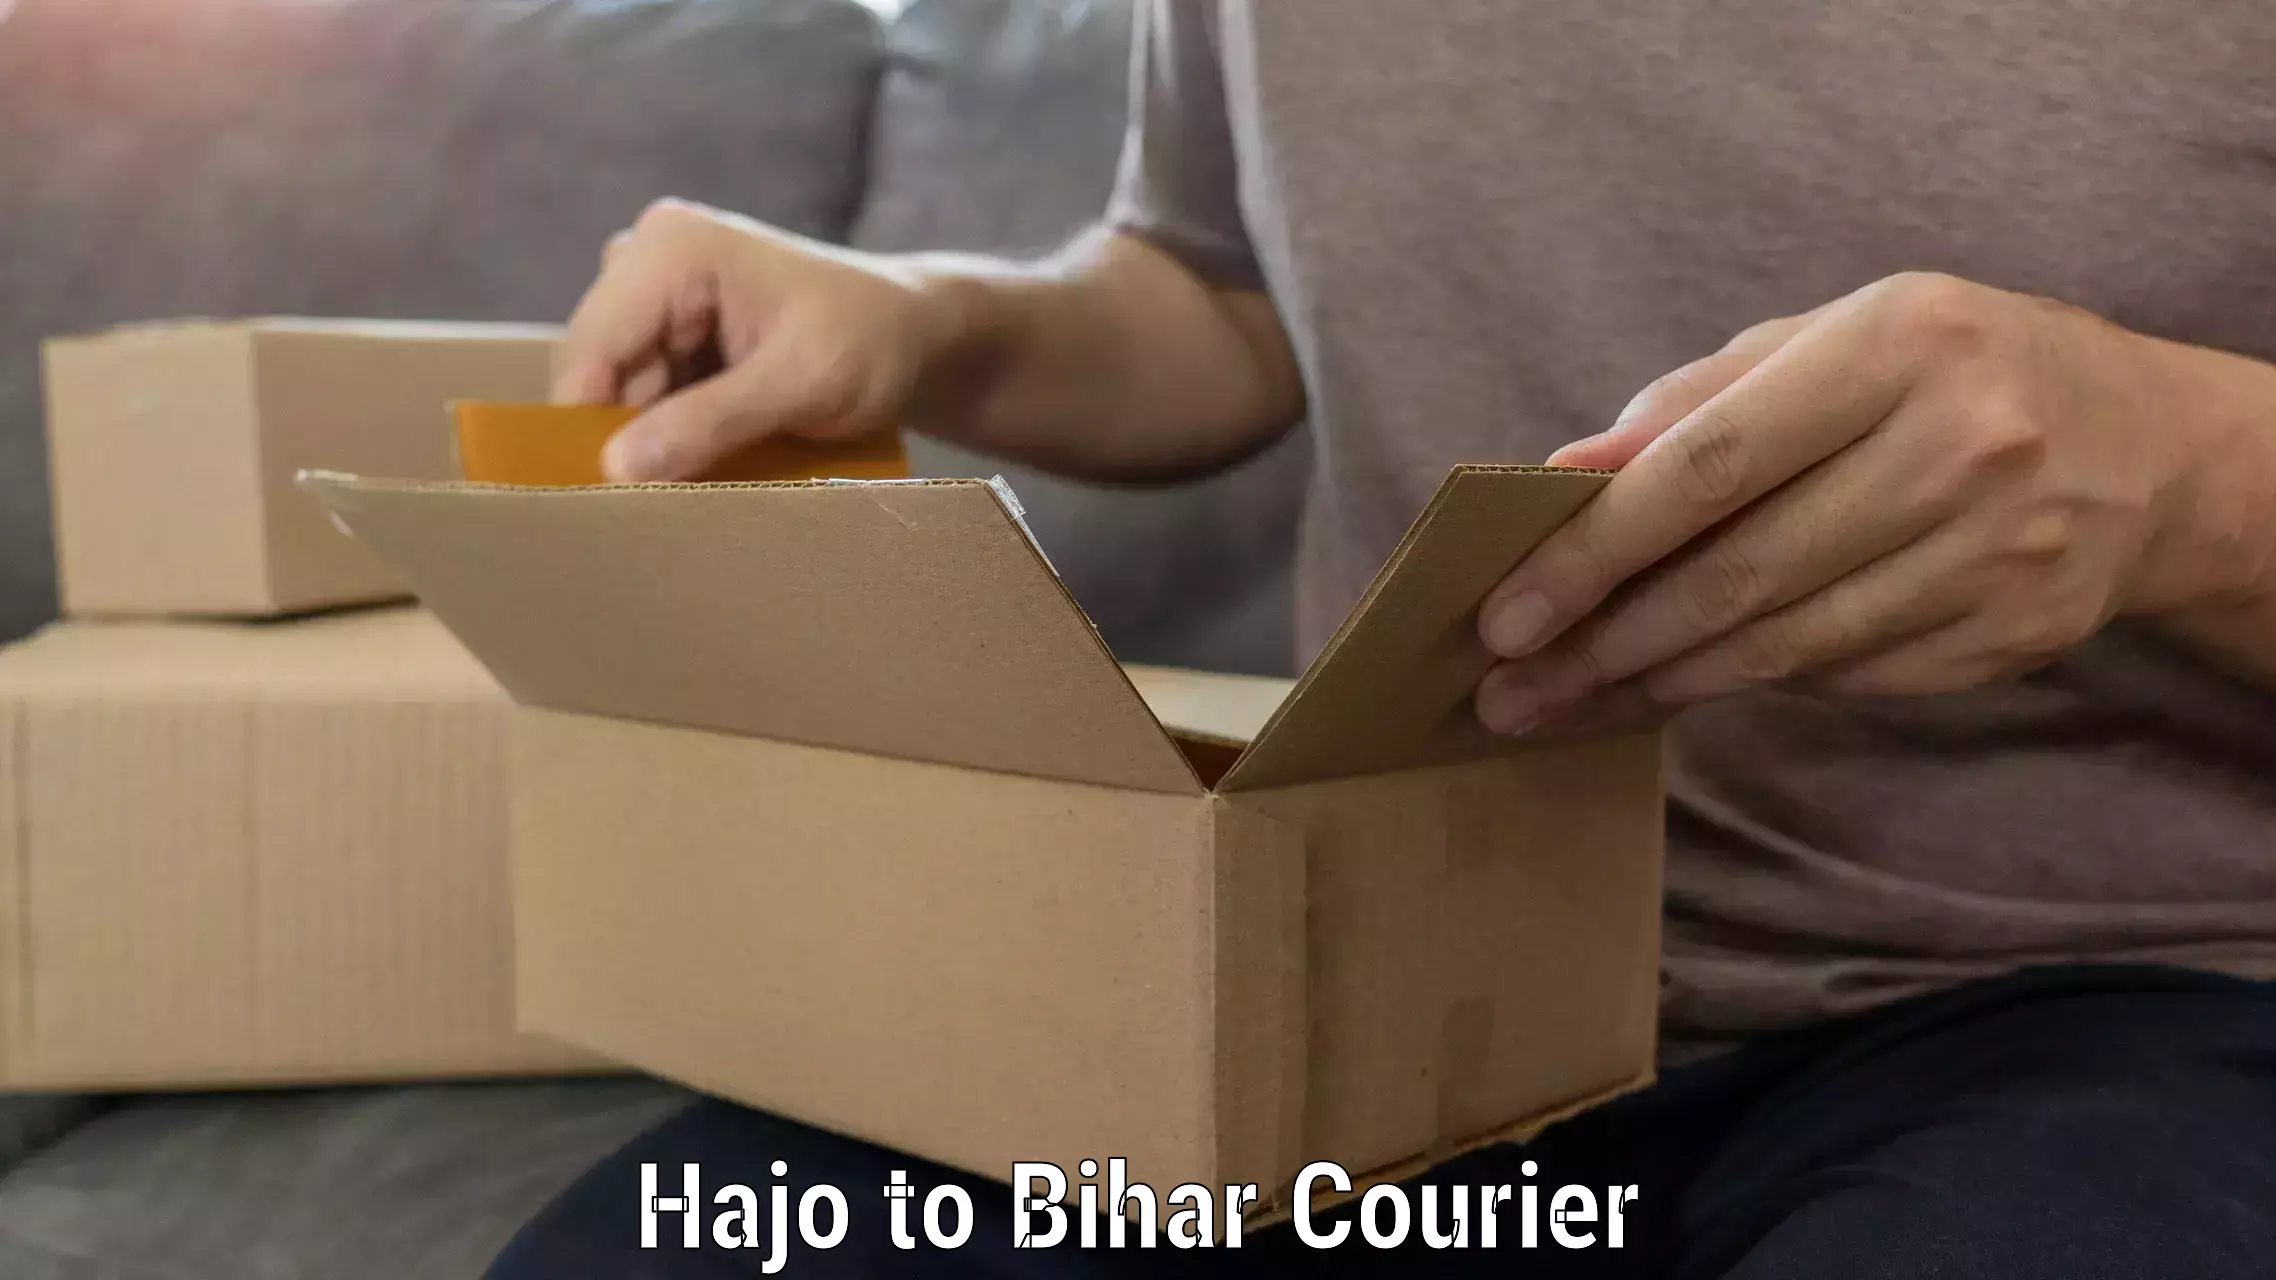 Home relocation experts Hajo to Bihar